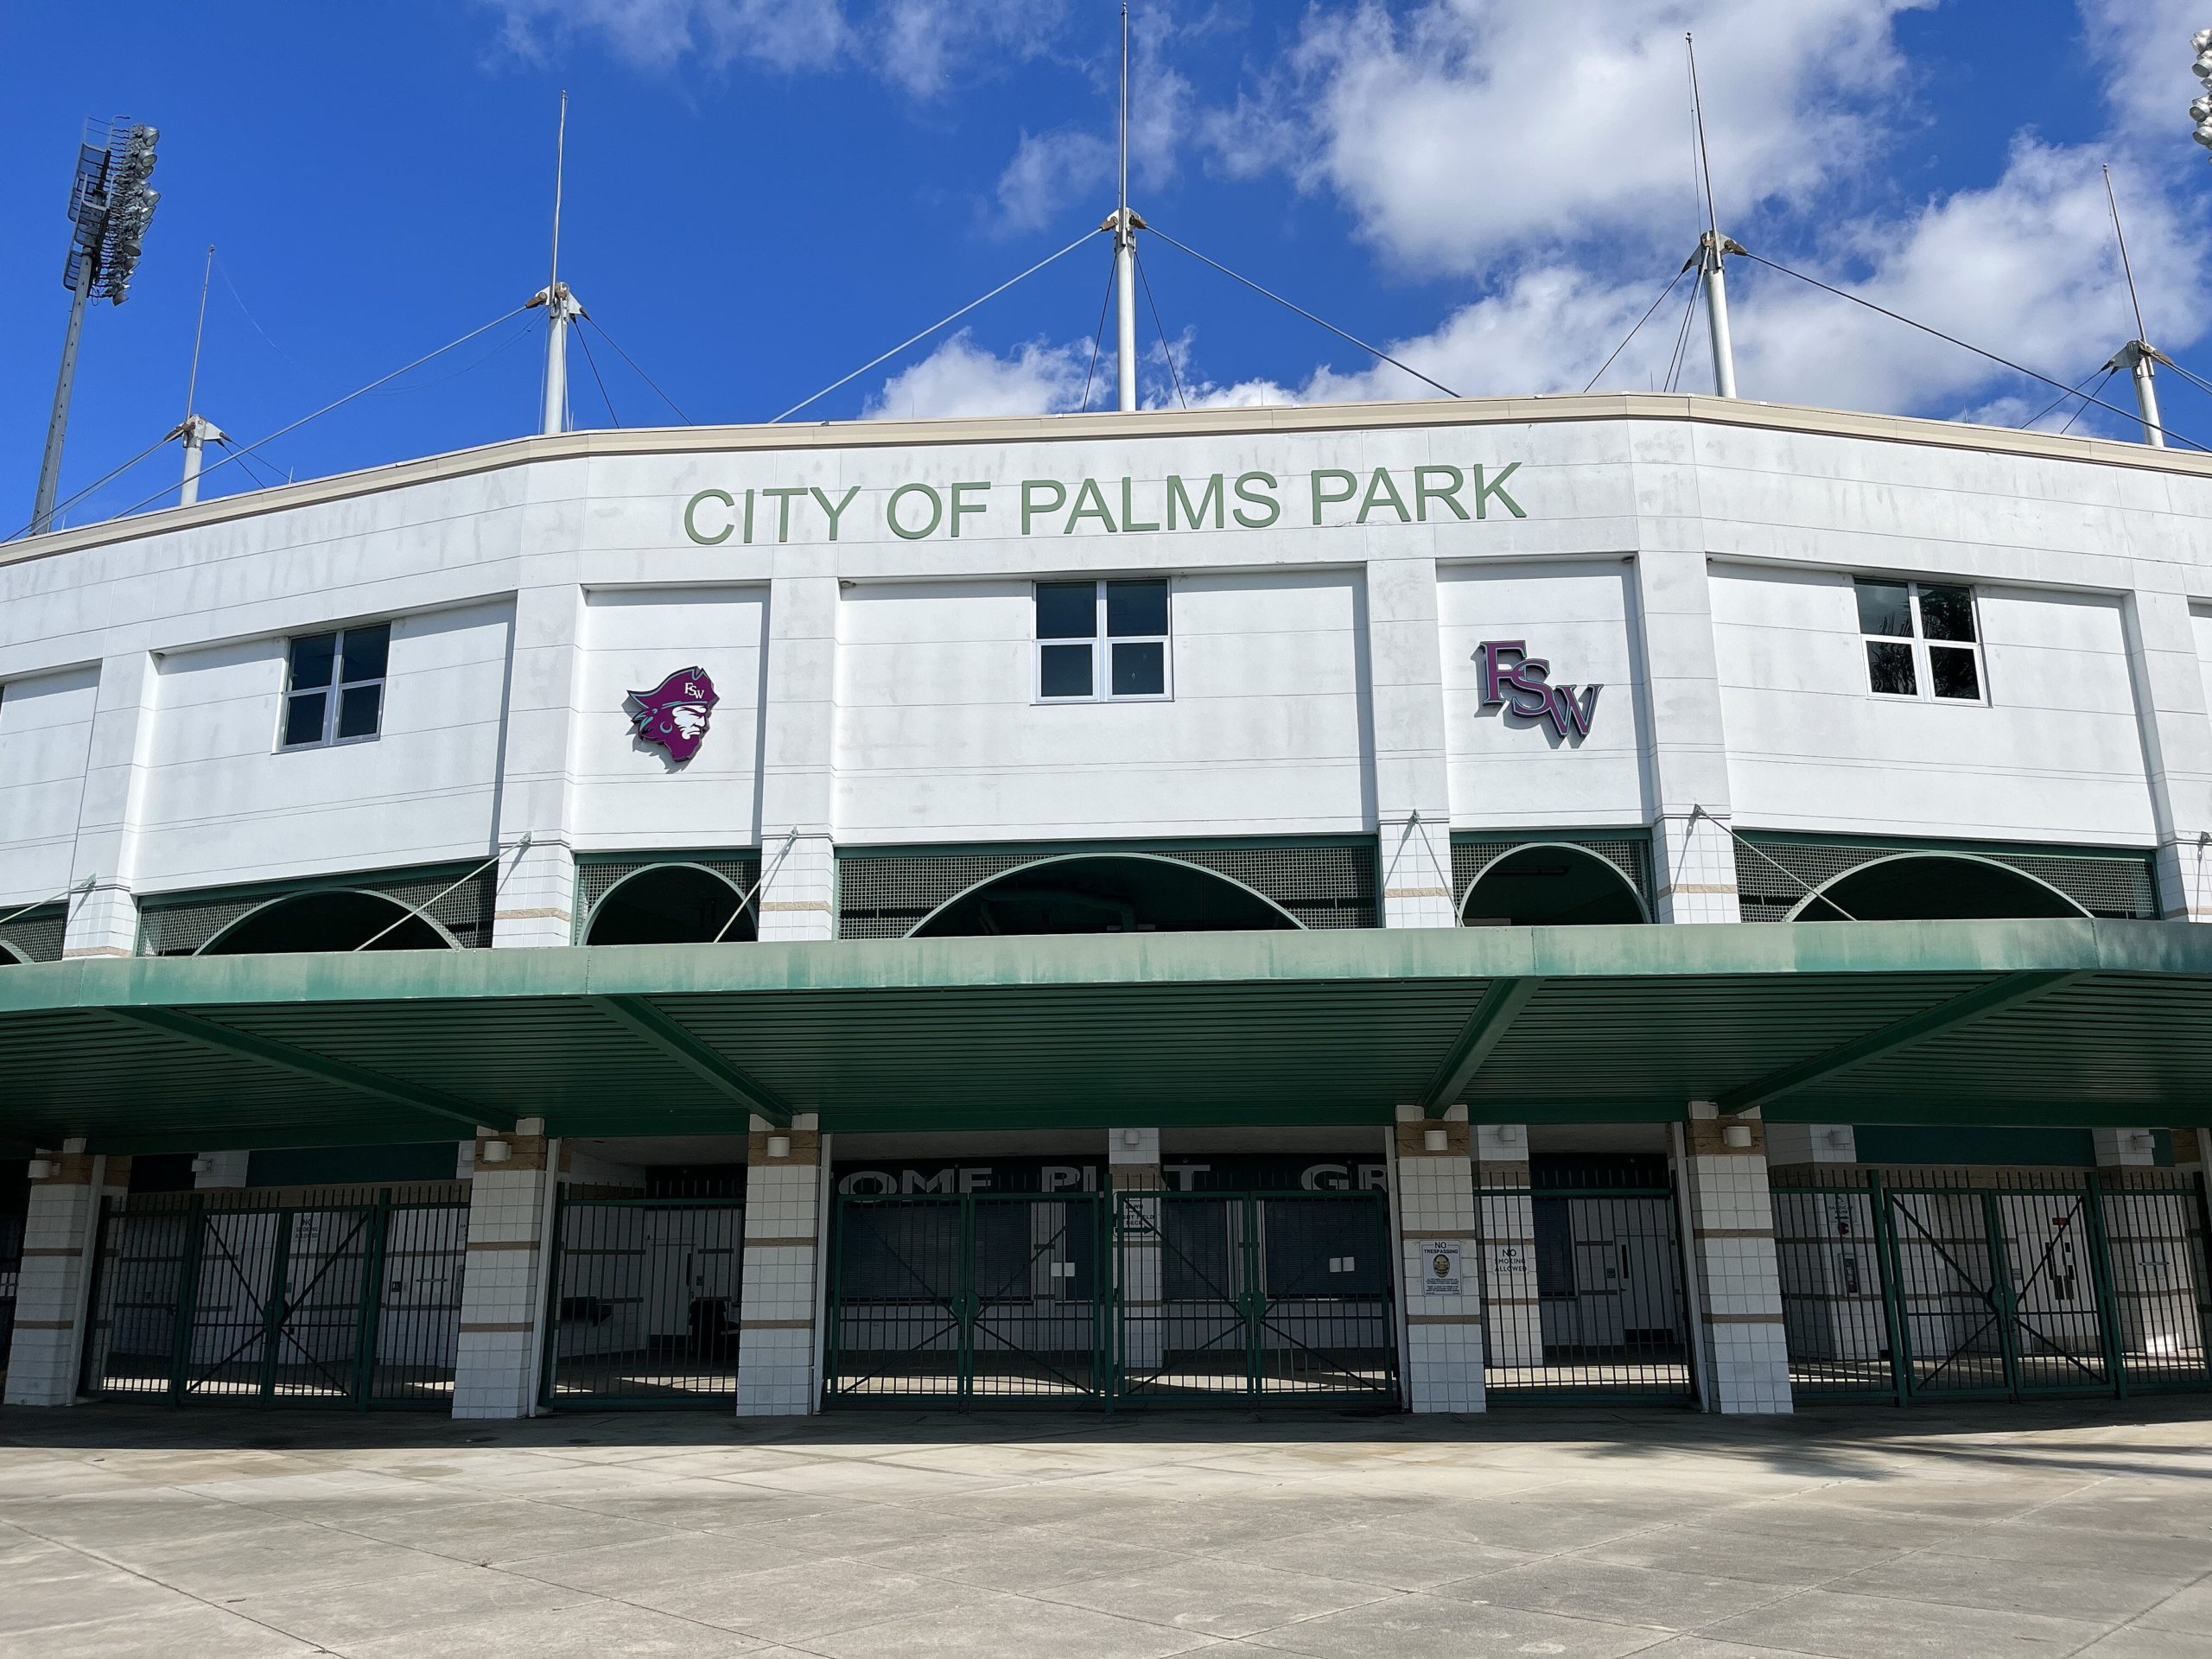 Fort Myers' City of Palms Park